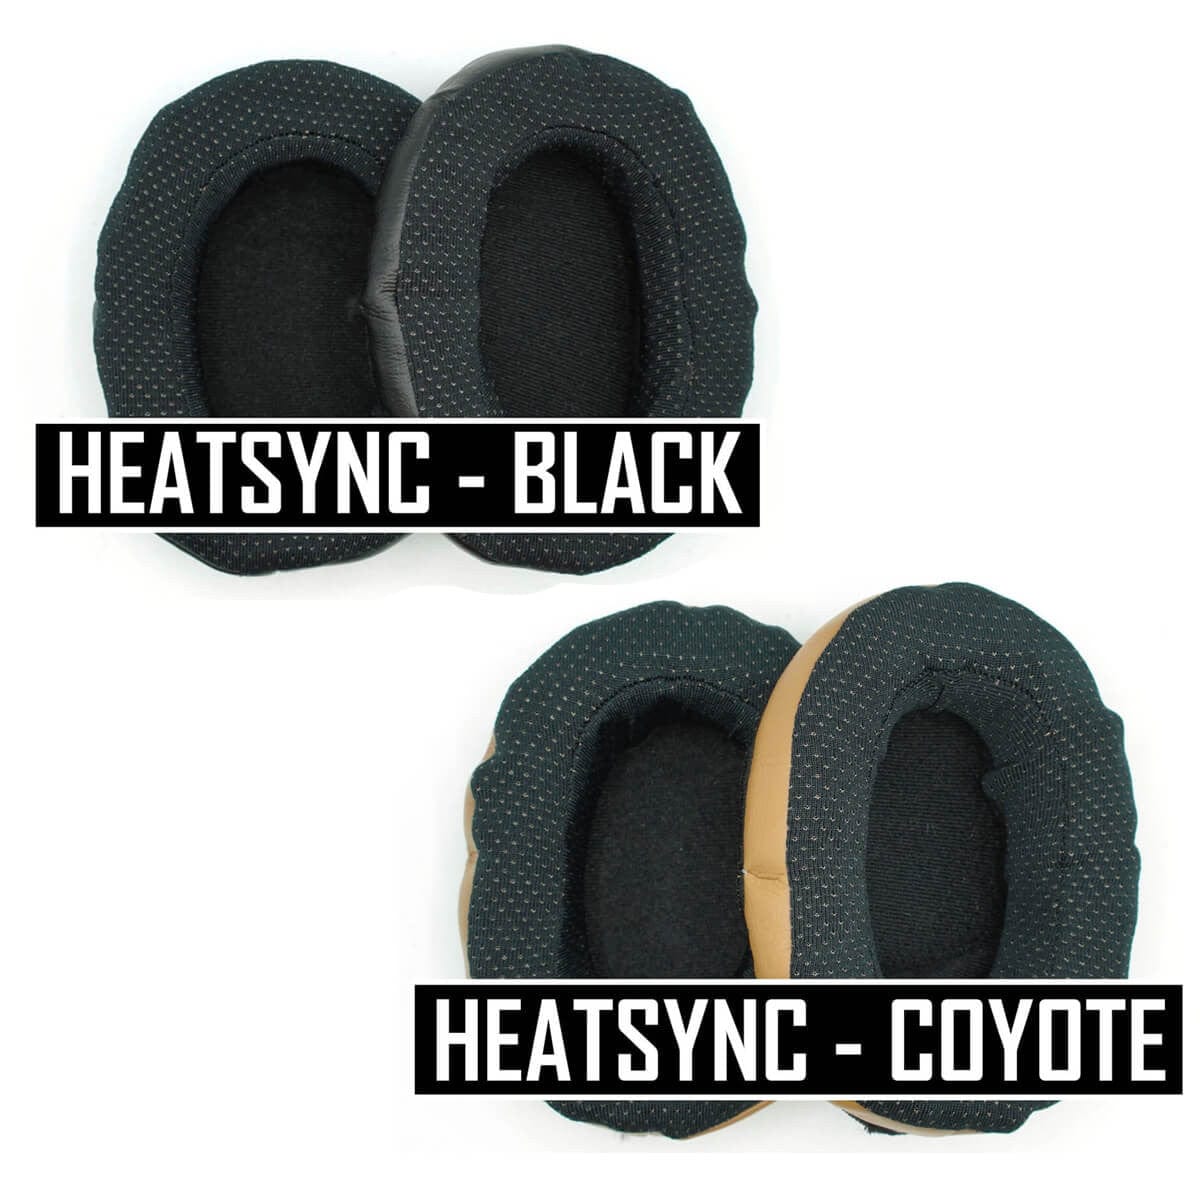 Noisefighters Heatsync Sweat-Wicking Ear Pad Covers - Black & Coyote